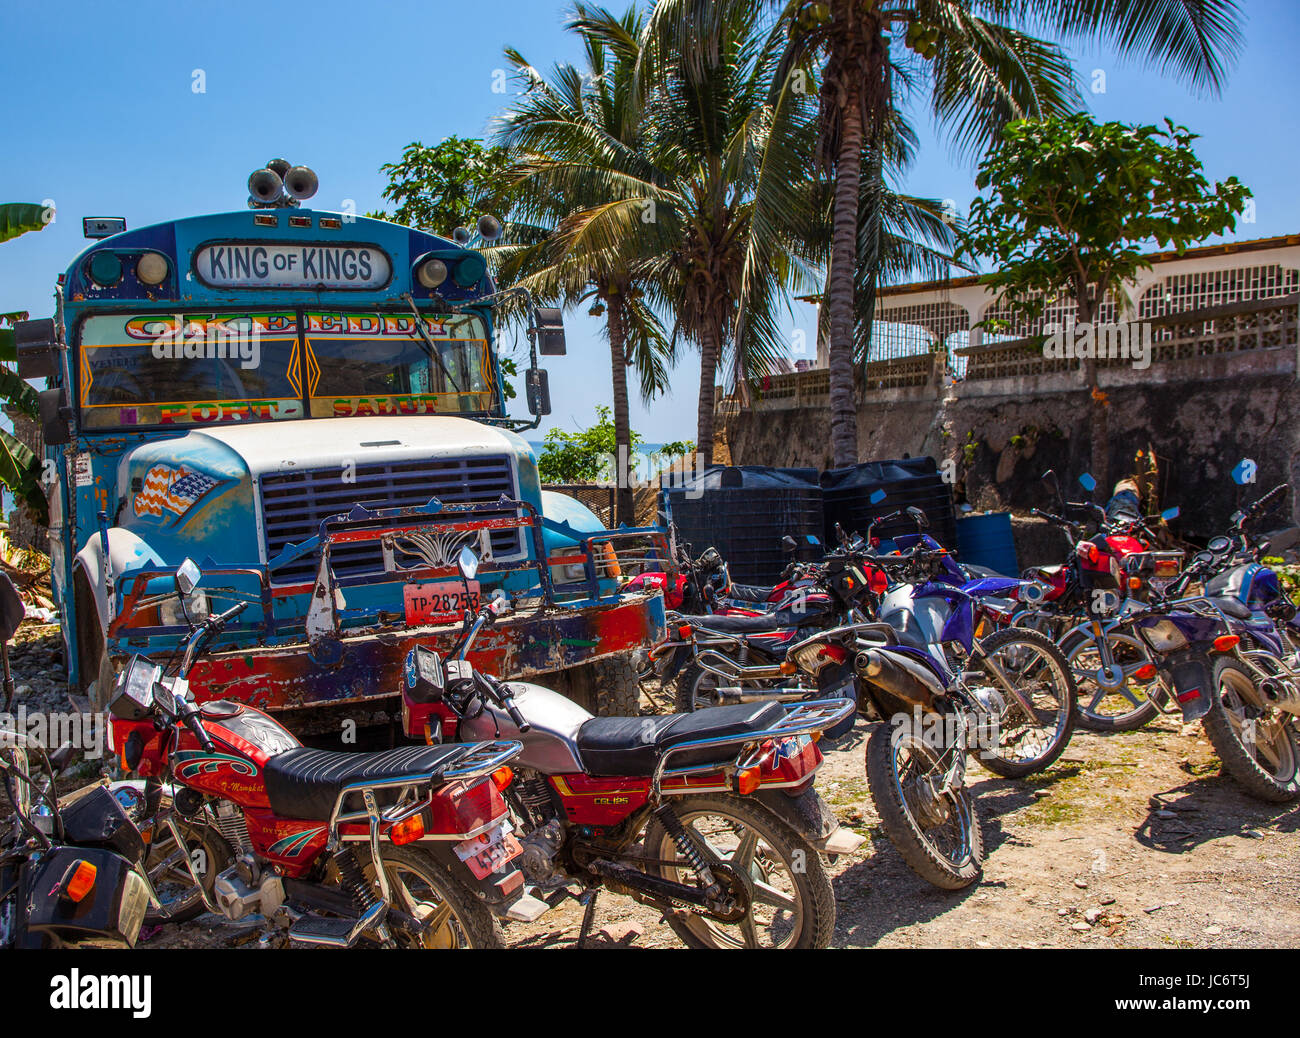 school bus, palm trees, motorcycles Stock Photo